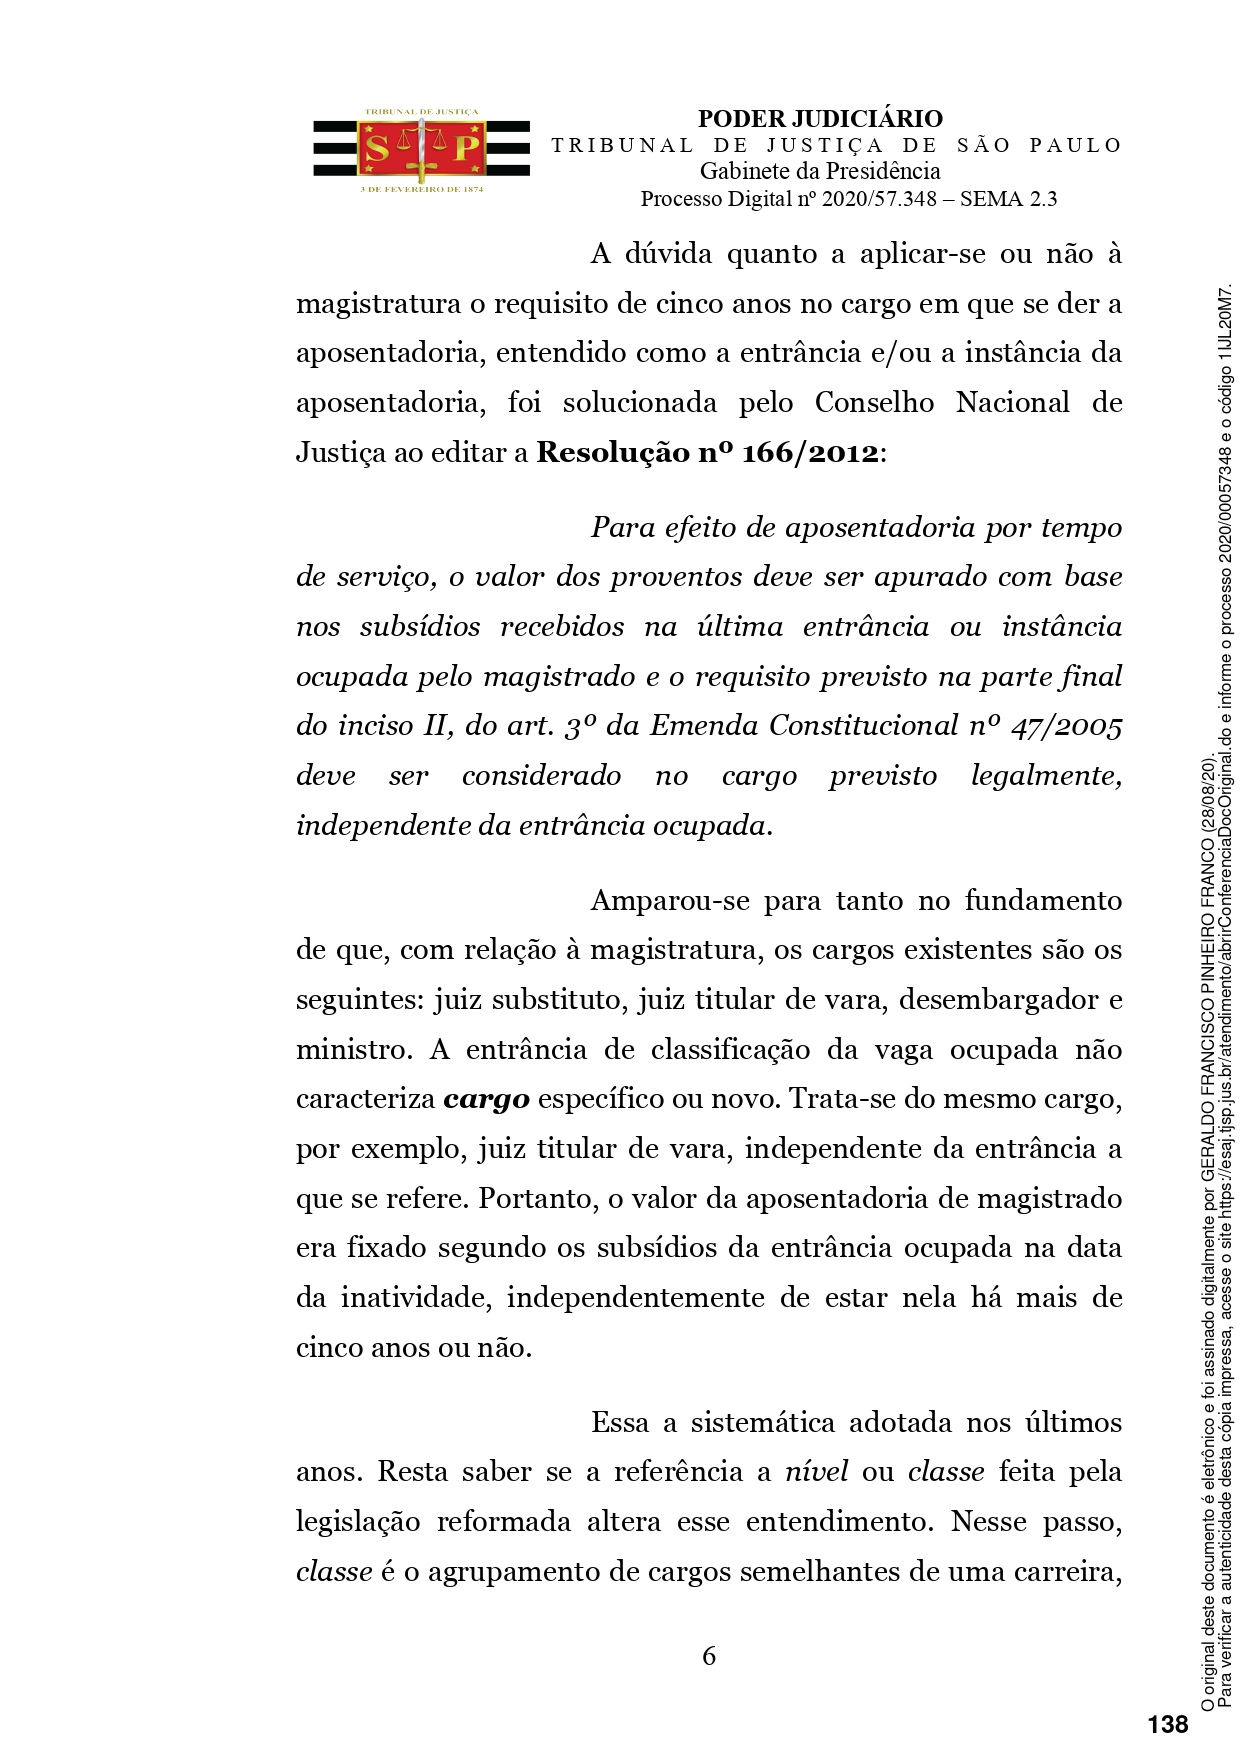 reforma-previdencia-tj-sp_page-0006.jpg